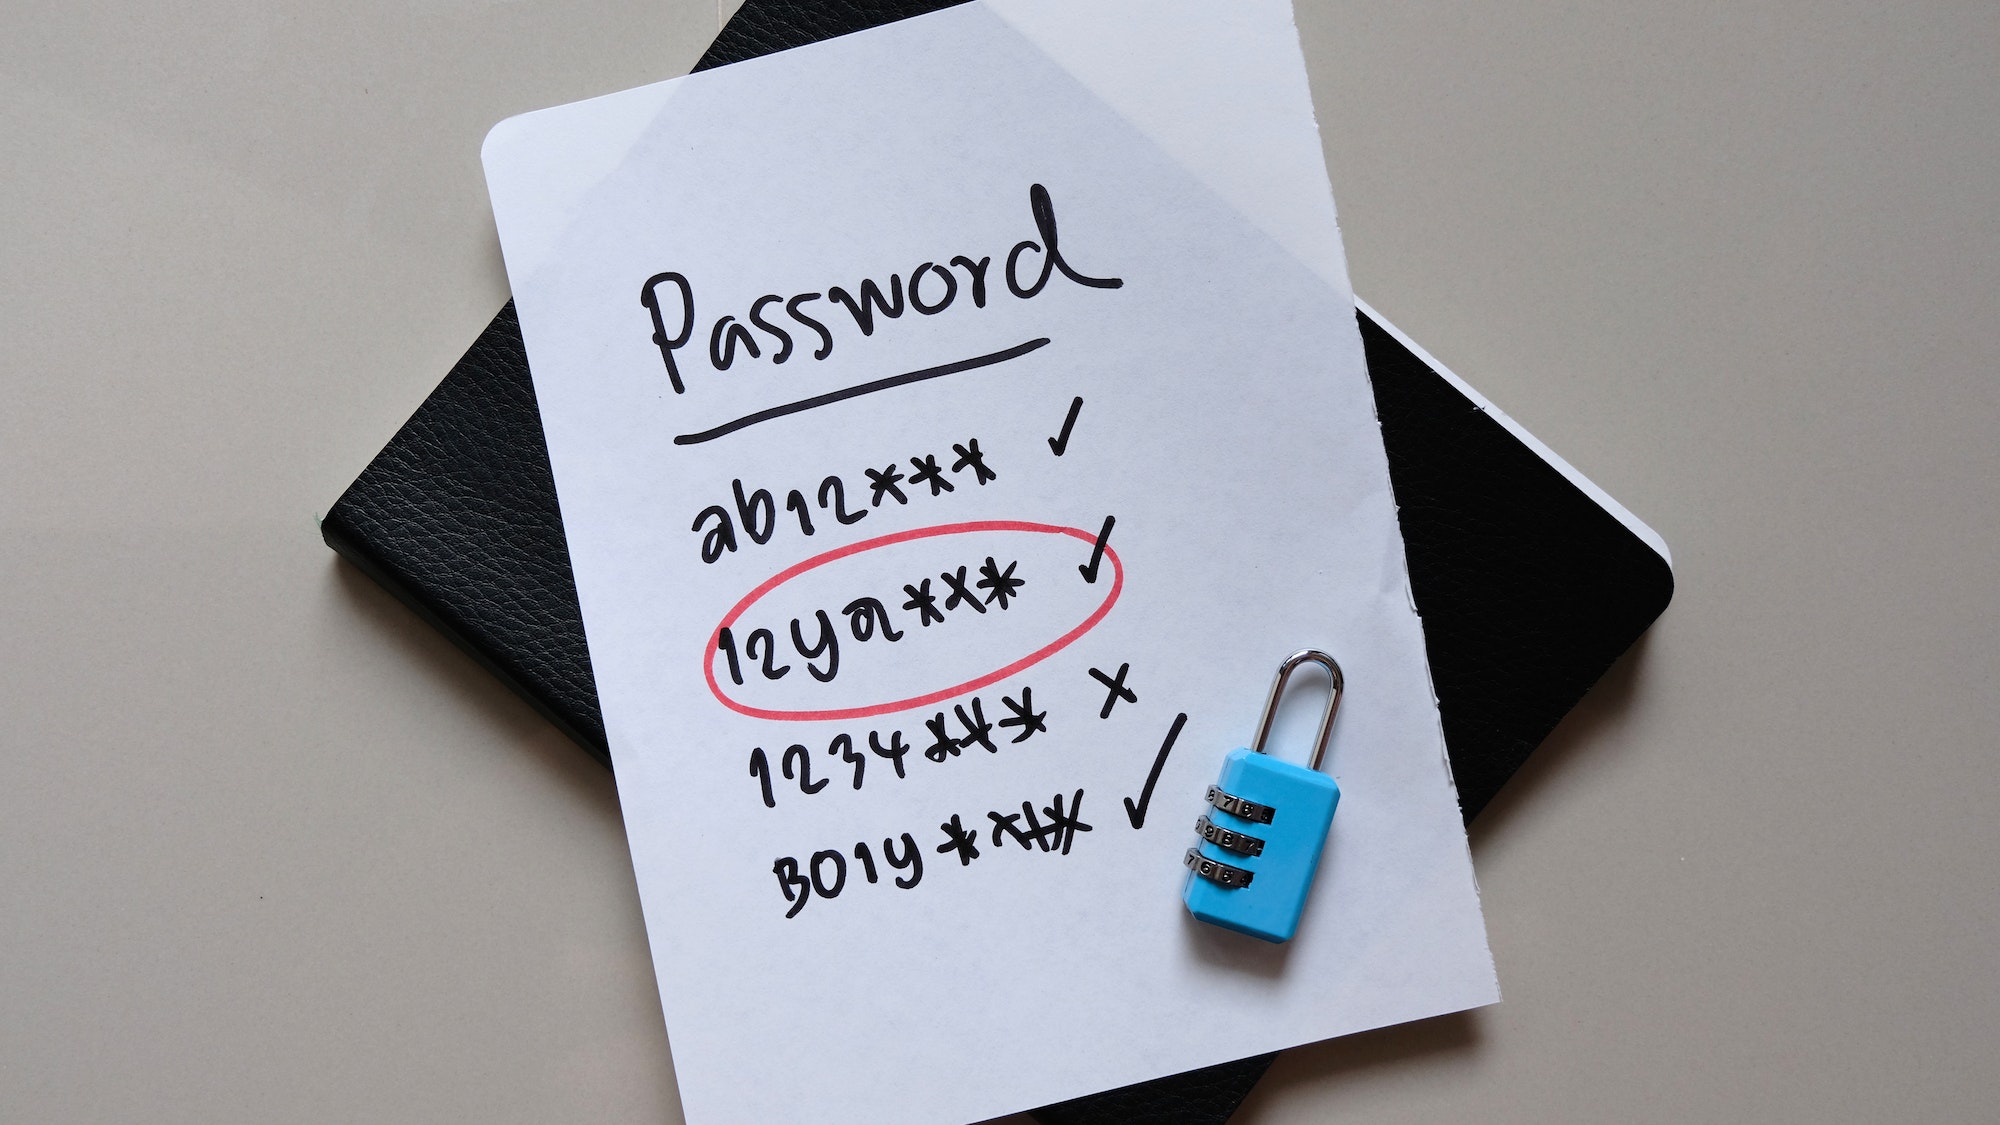 'Password' message concept written post it on notebook.